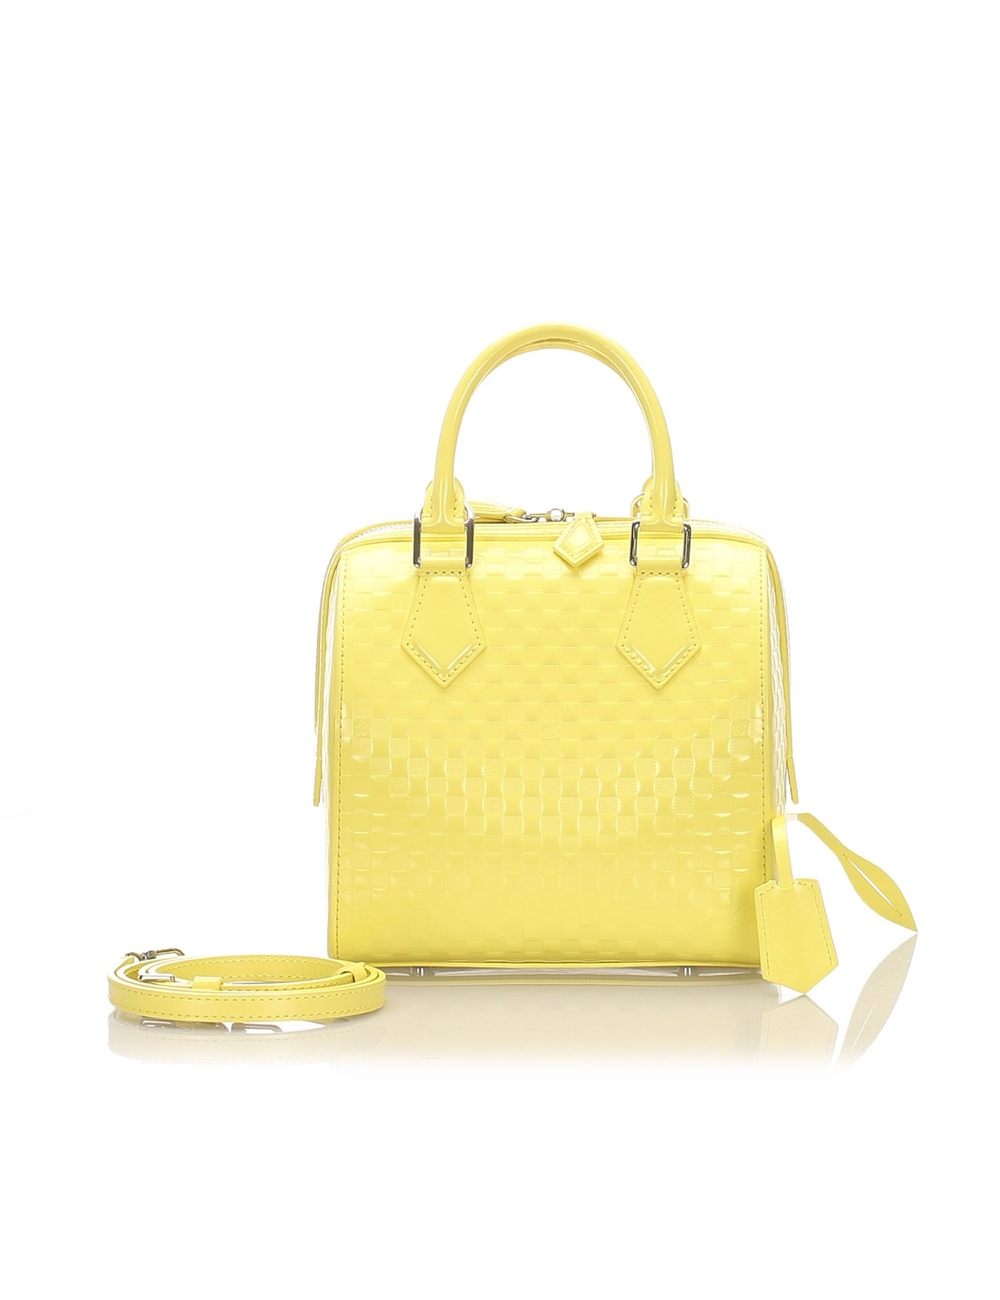 Product Details: Yellow Louis Vuitton Damier Facette Speedy Cube PM Bag. The Speedy Cube PM features